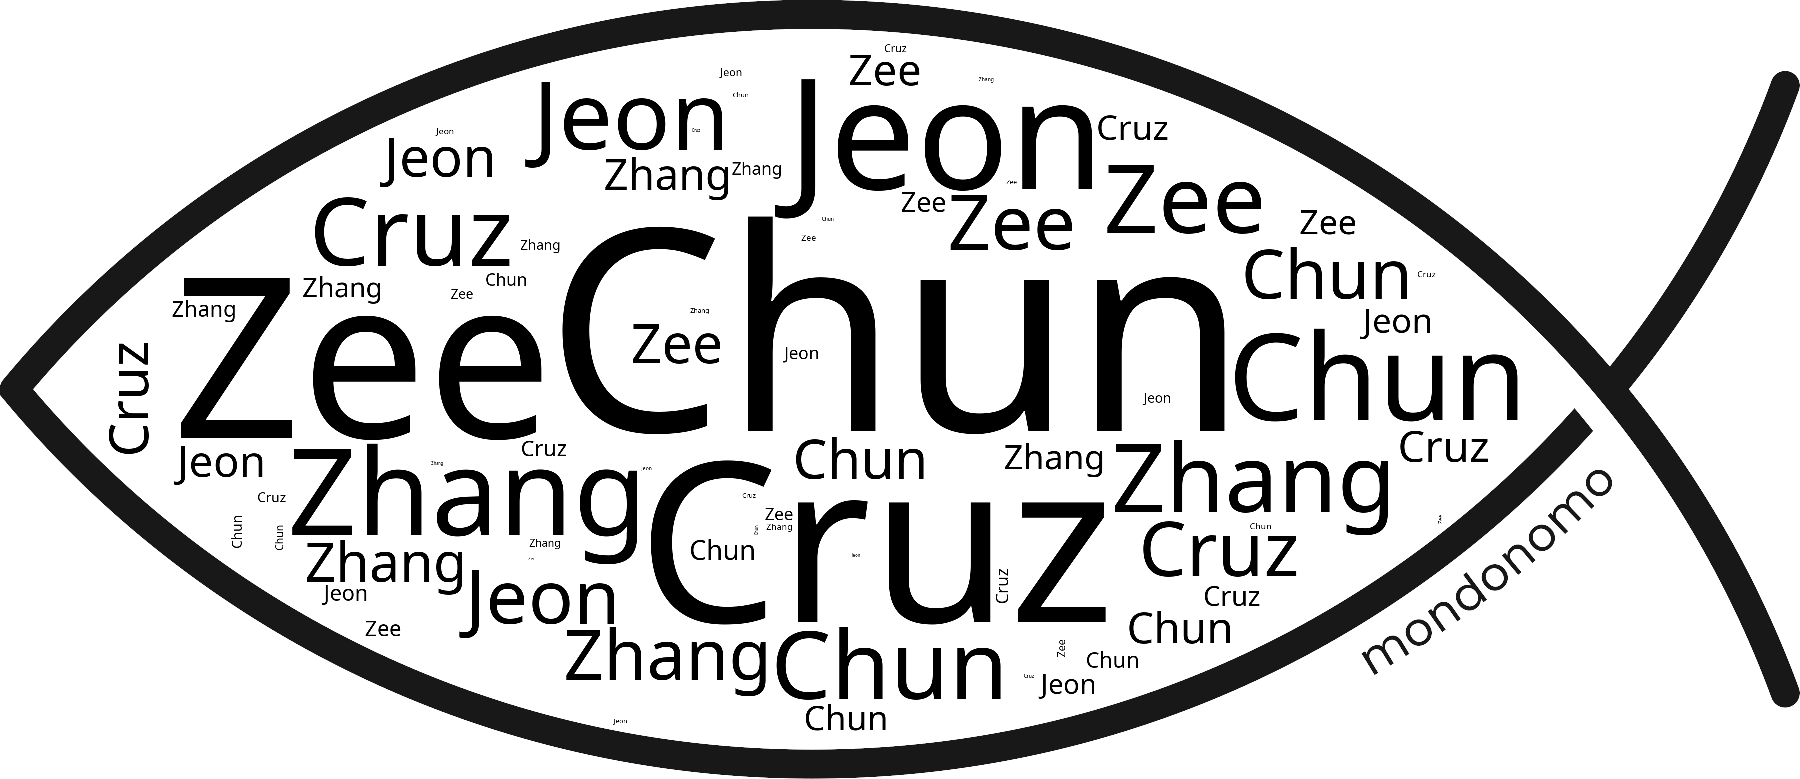 Name Chun in the world's Bibles